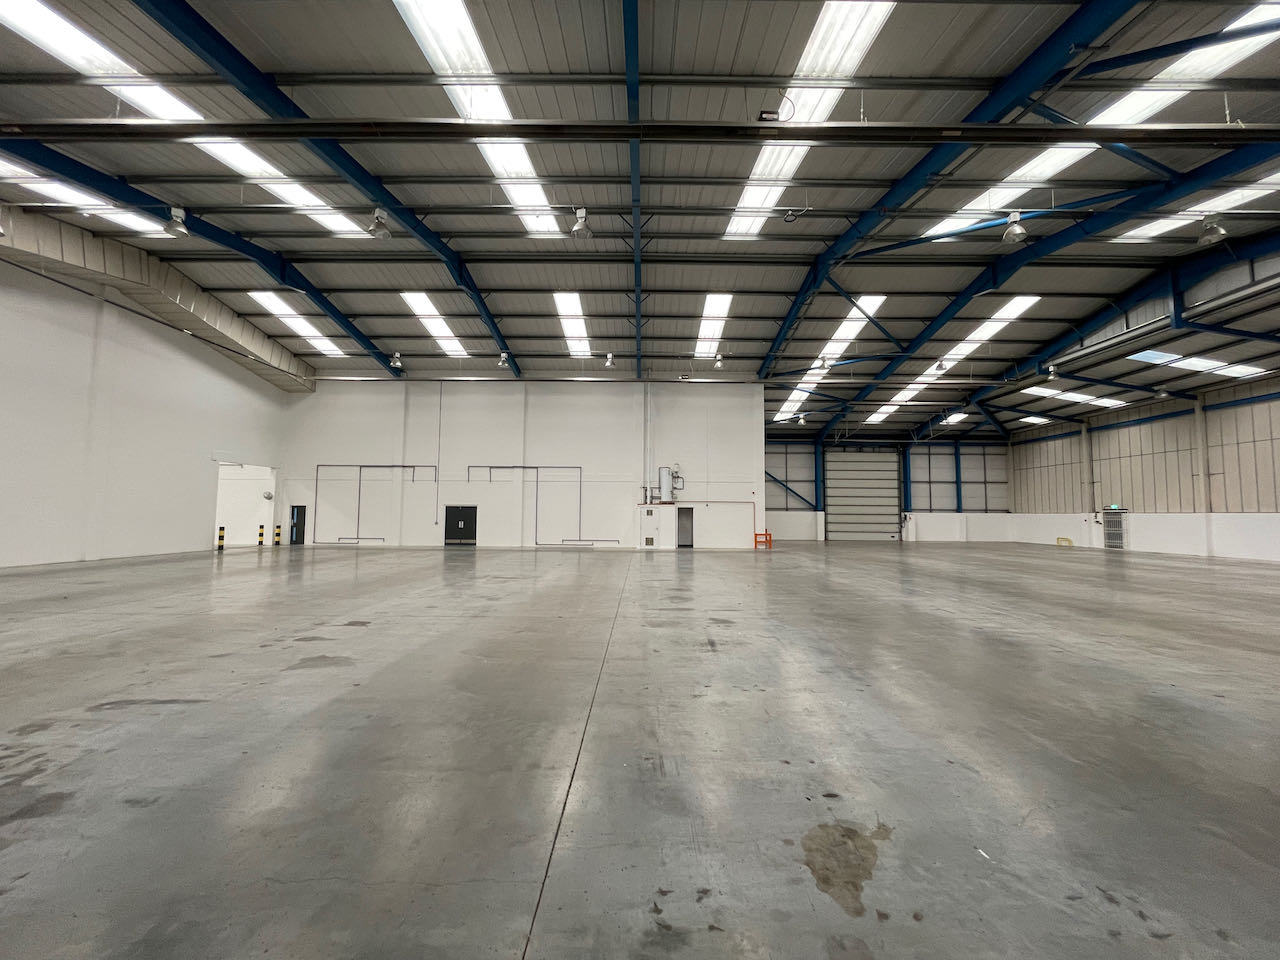 2-Millennium-Point-Aylesbury-warehouse-internal-2